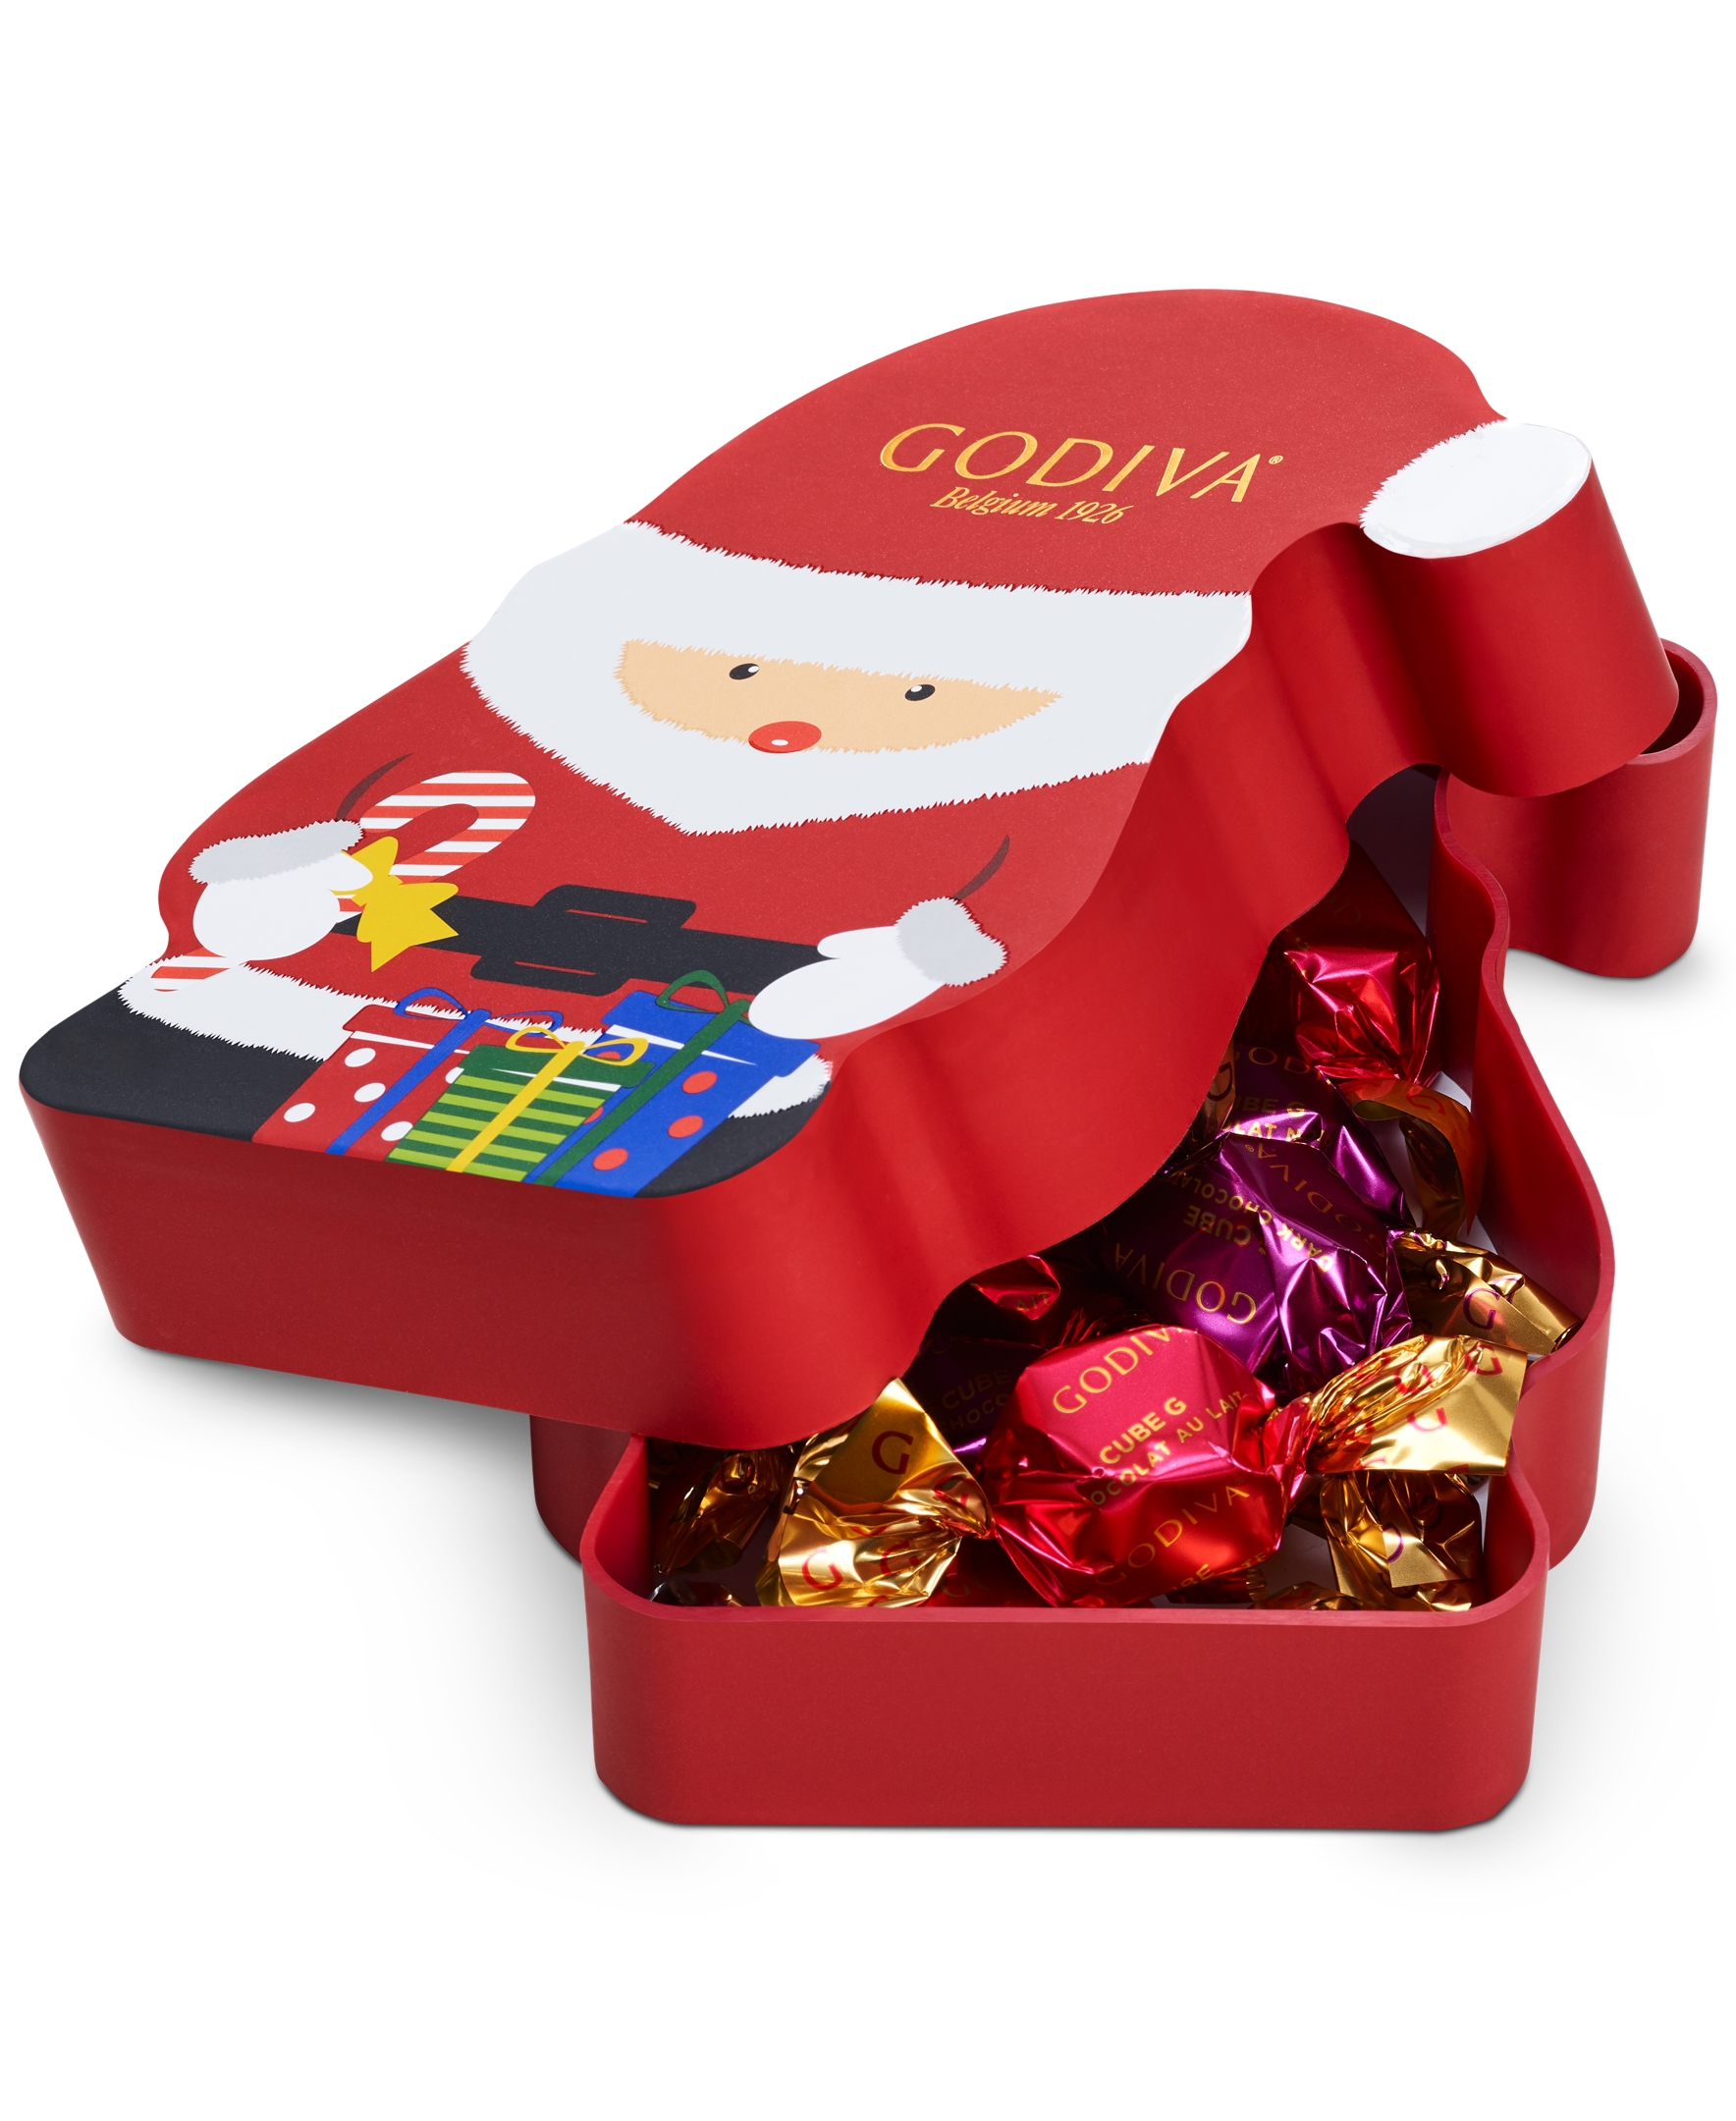 https://mms.businesswire.com/media/20211020005150/en/918106/5/Godiva%2C_G_Cube_Santa_Chocolate_Gift_Box%2C_12.95_%281%29.jpg